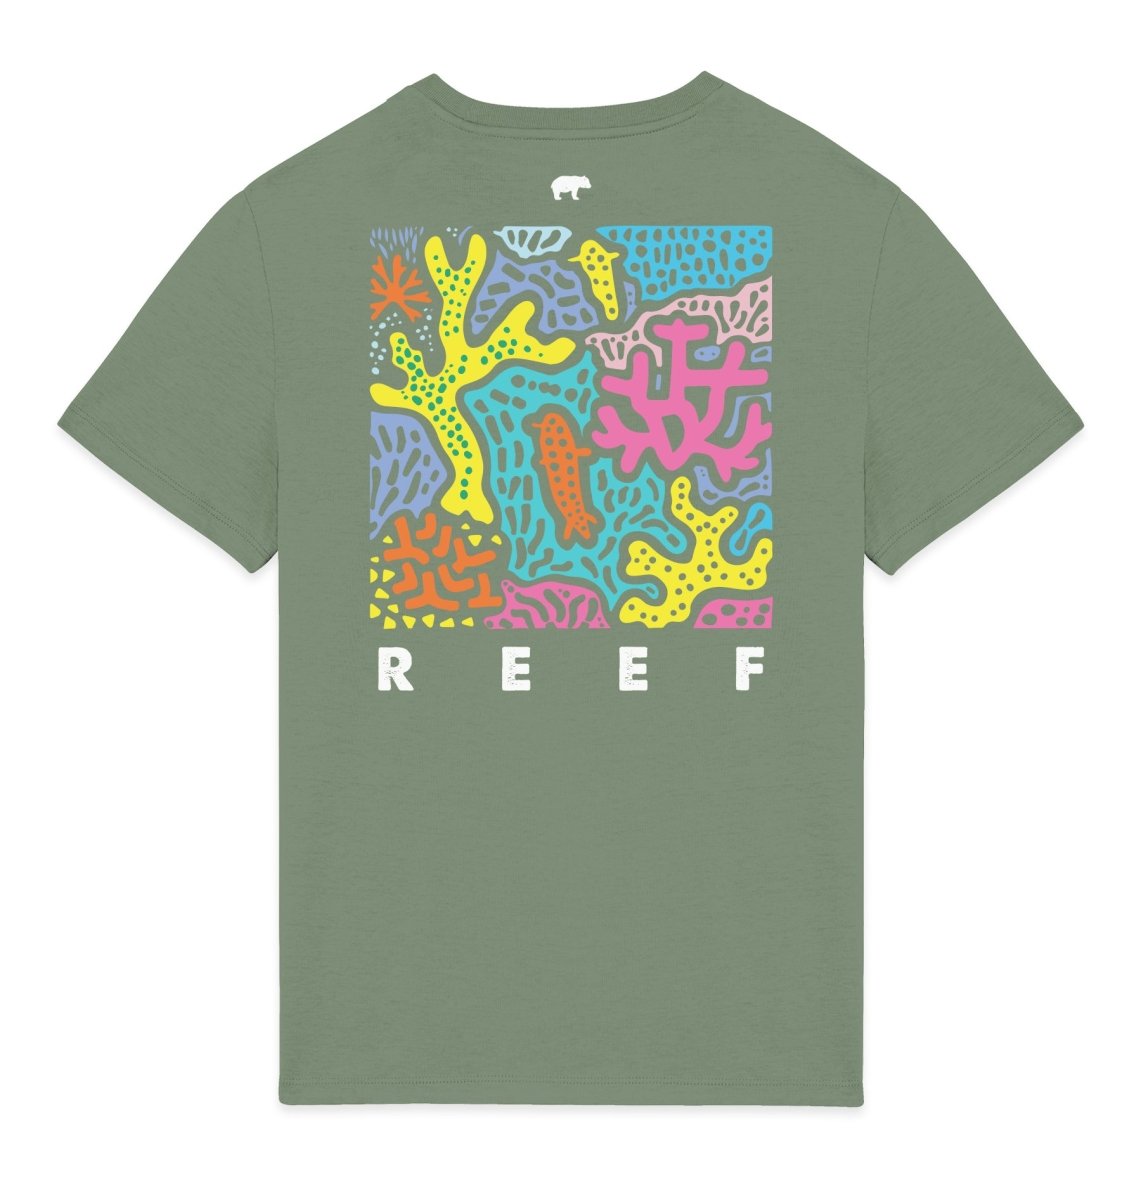 Reef Graphic Womens T-shirt - Blue Panda